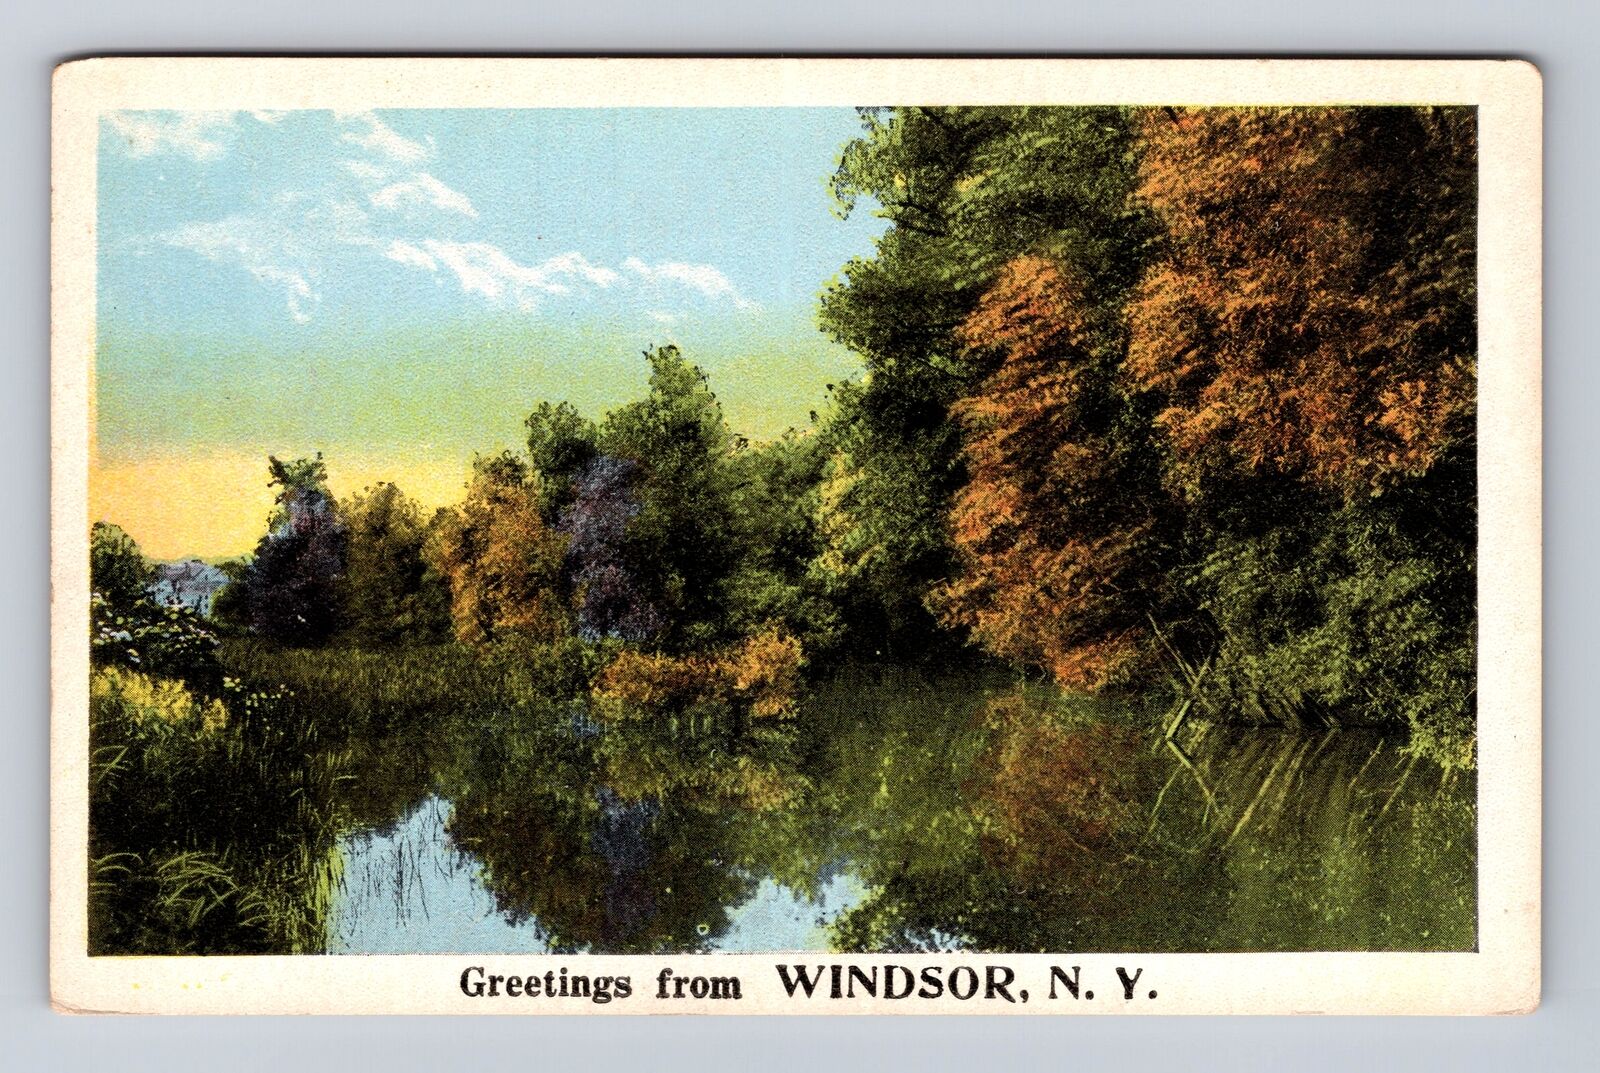 Windsor NY-New York, General Greetings, Scenic Mirror Pond, Vintage Postcard